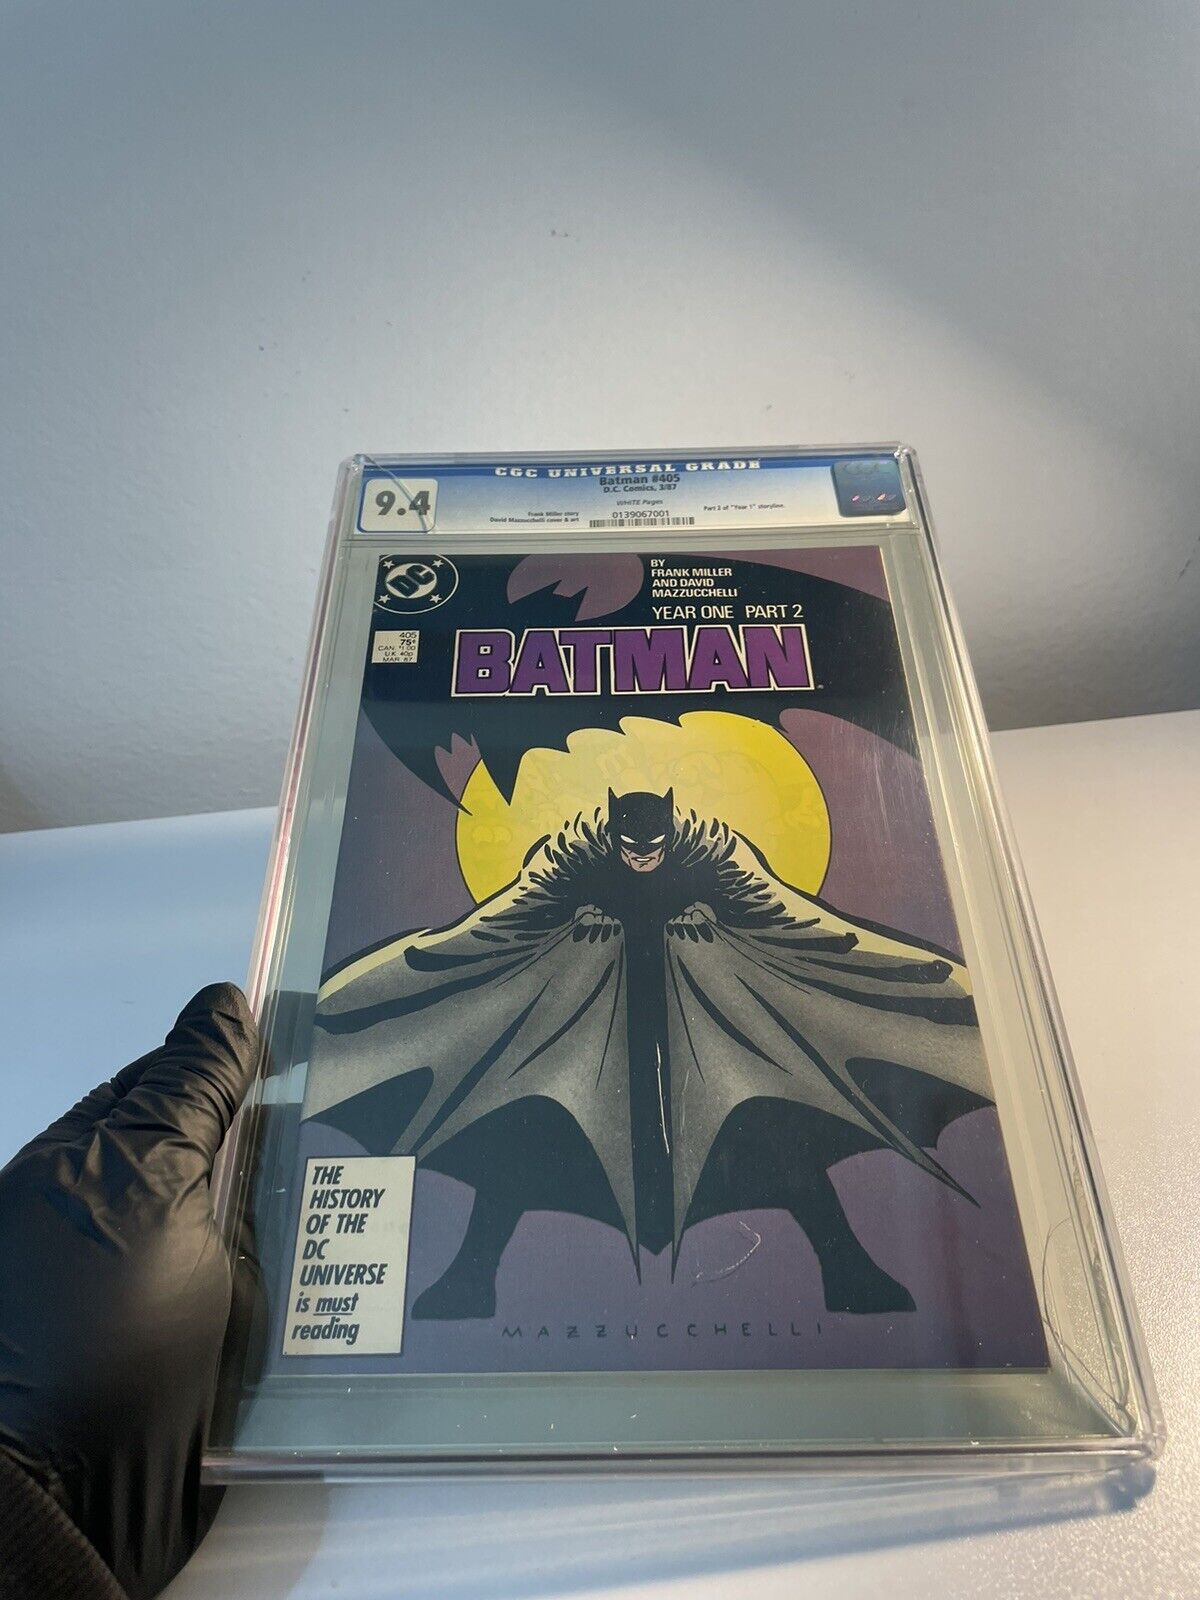 (COVER BROKEN) Batman #405 CGC 9.4 WP 1987 DC Comics Year One Part 2